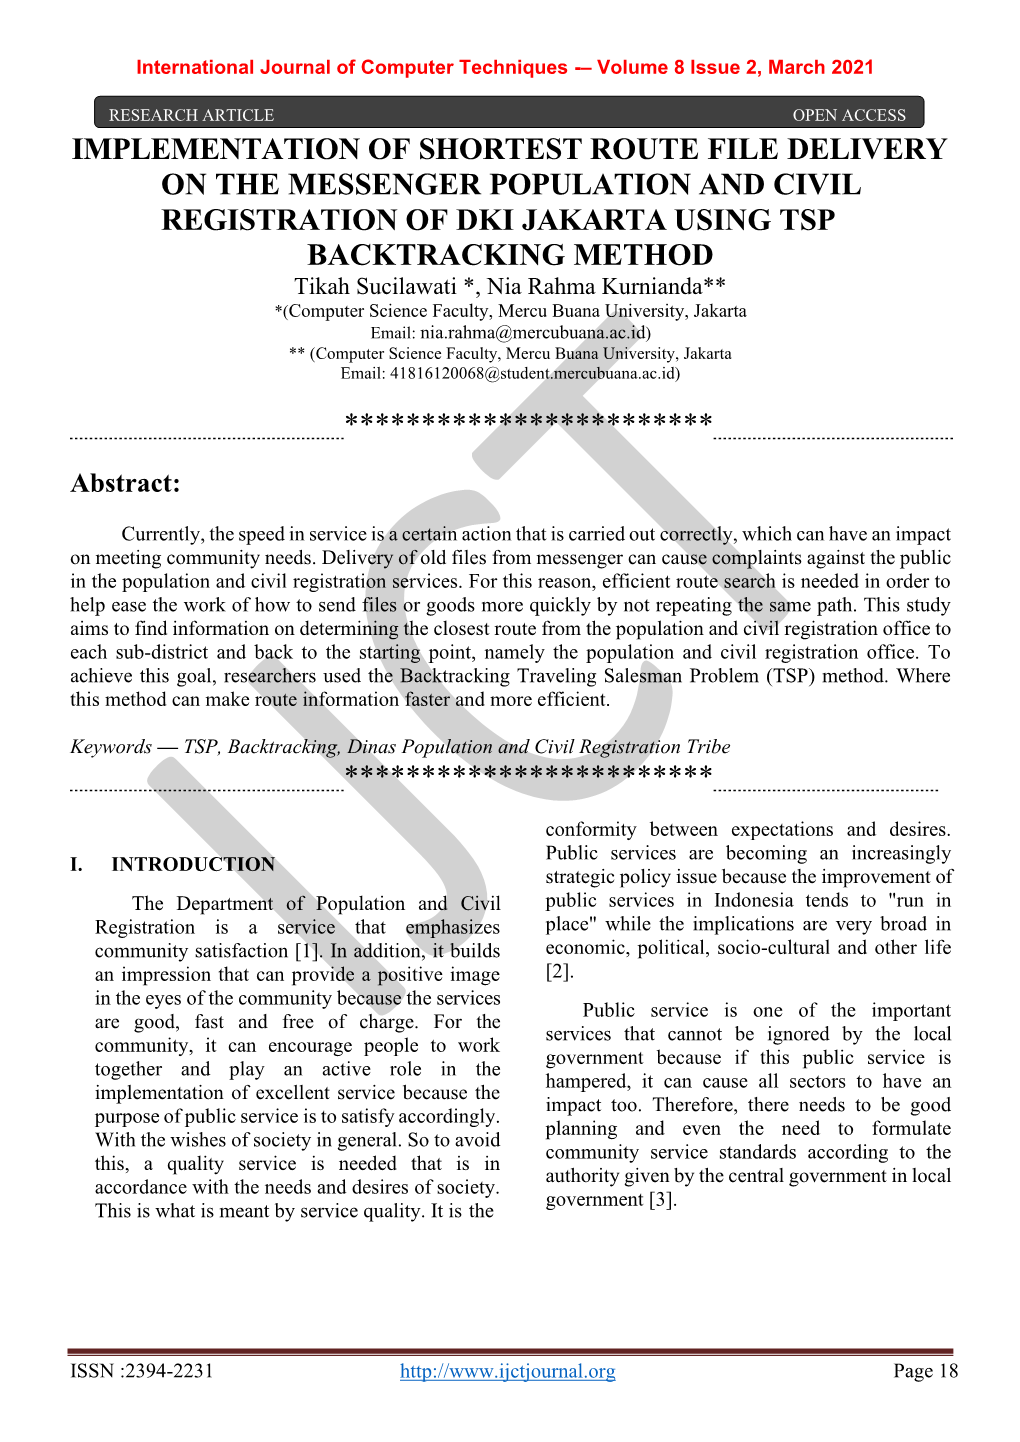 Implementation of Shortest Route File Delivery on the Messenger Population and Civil Registration of Dki Jakarta Using Tsp Backt